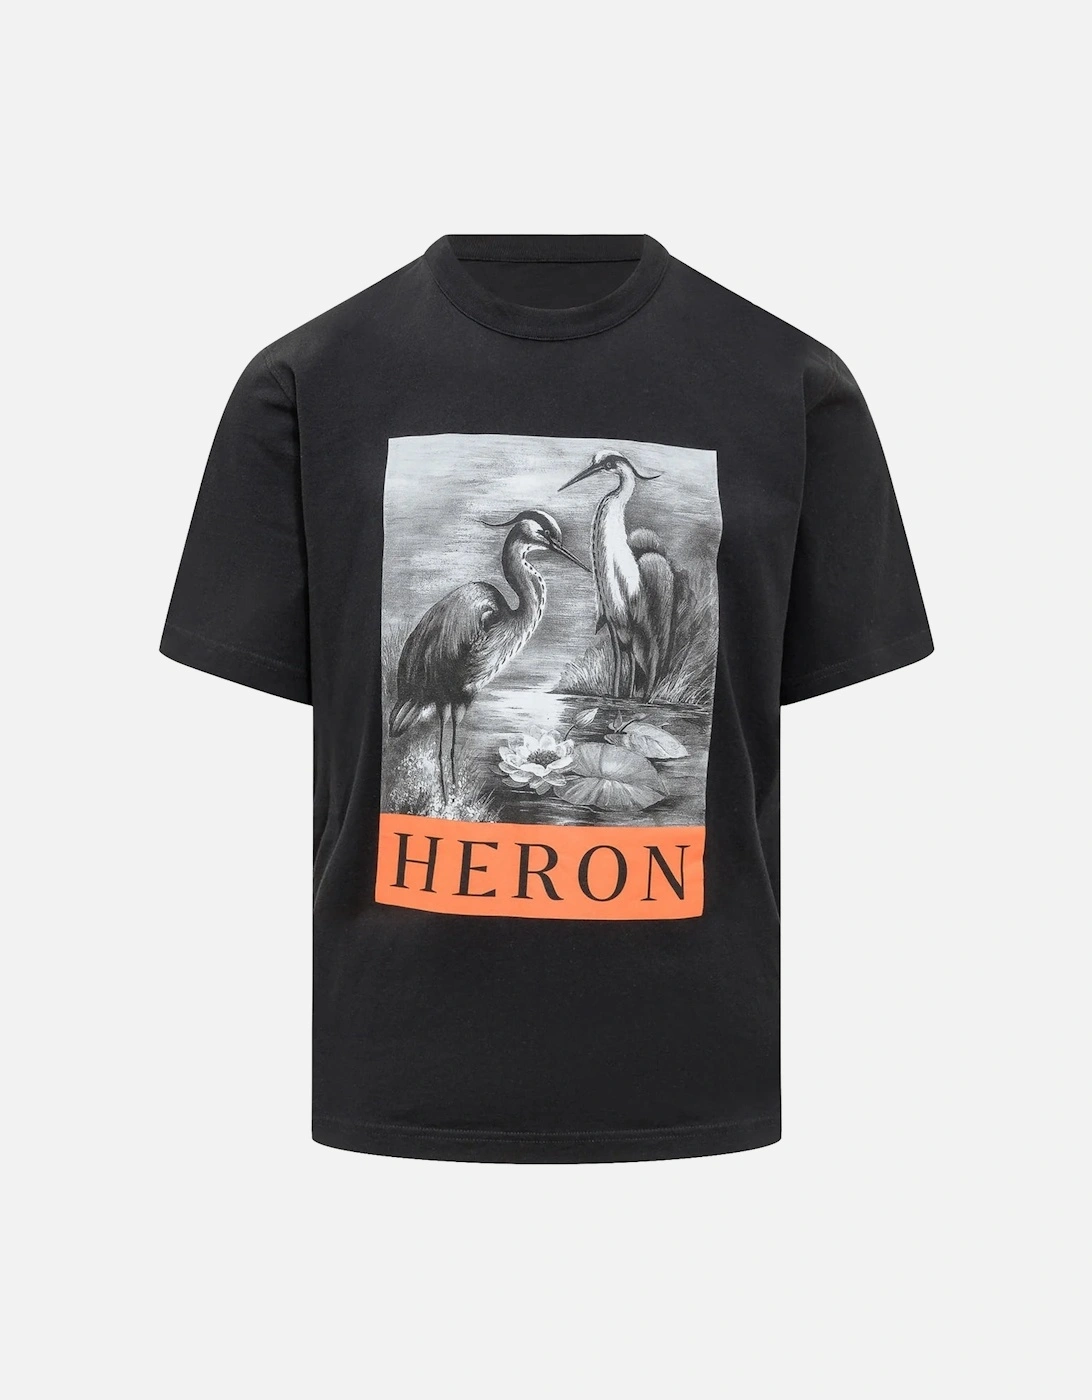 Heron Printed T-Shirt in Black, 4 of 3